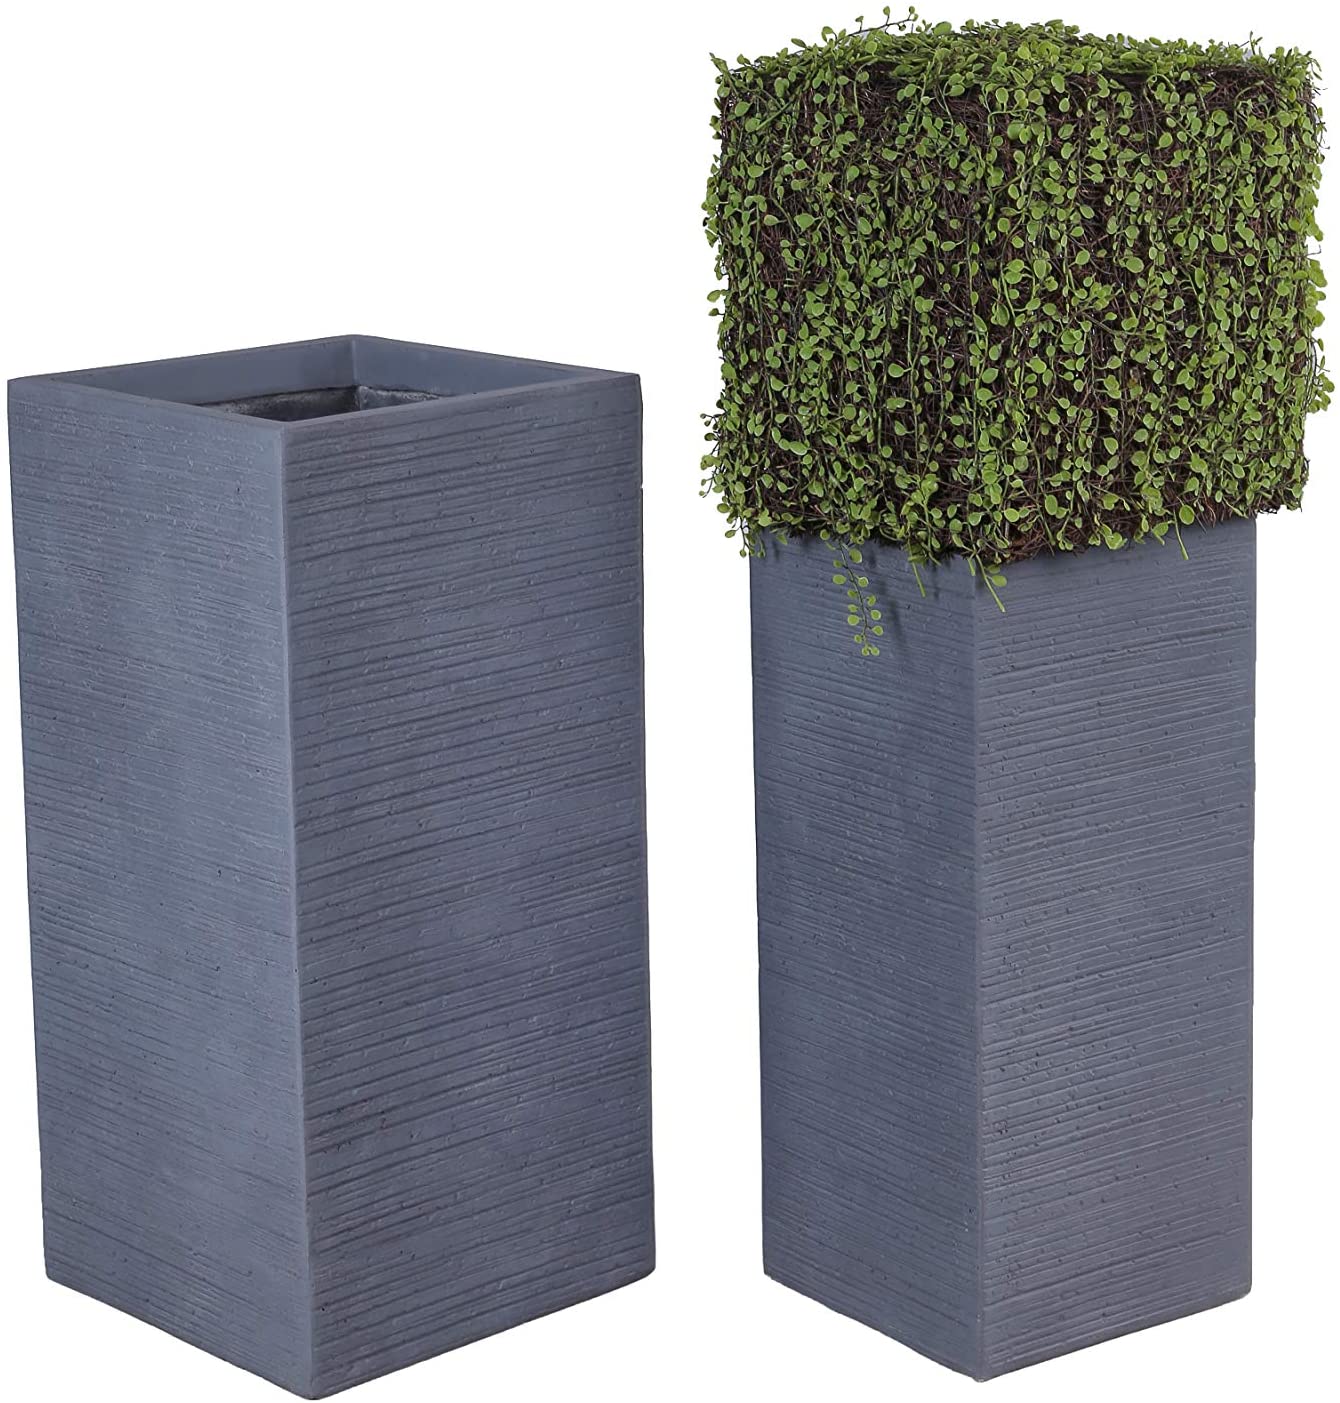 Grey Skyline Lightweight Tall Square Concrete Planter Pots | Unique Design | Handicraft | UV-Resistant and Eco-Friendly | Drainage Hole with Plug